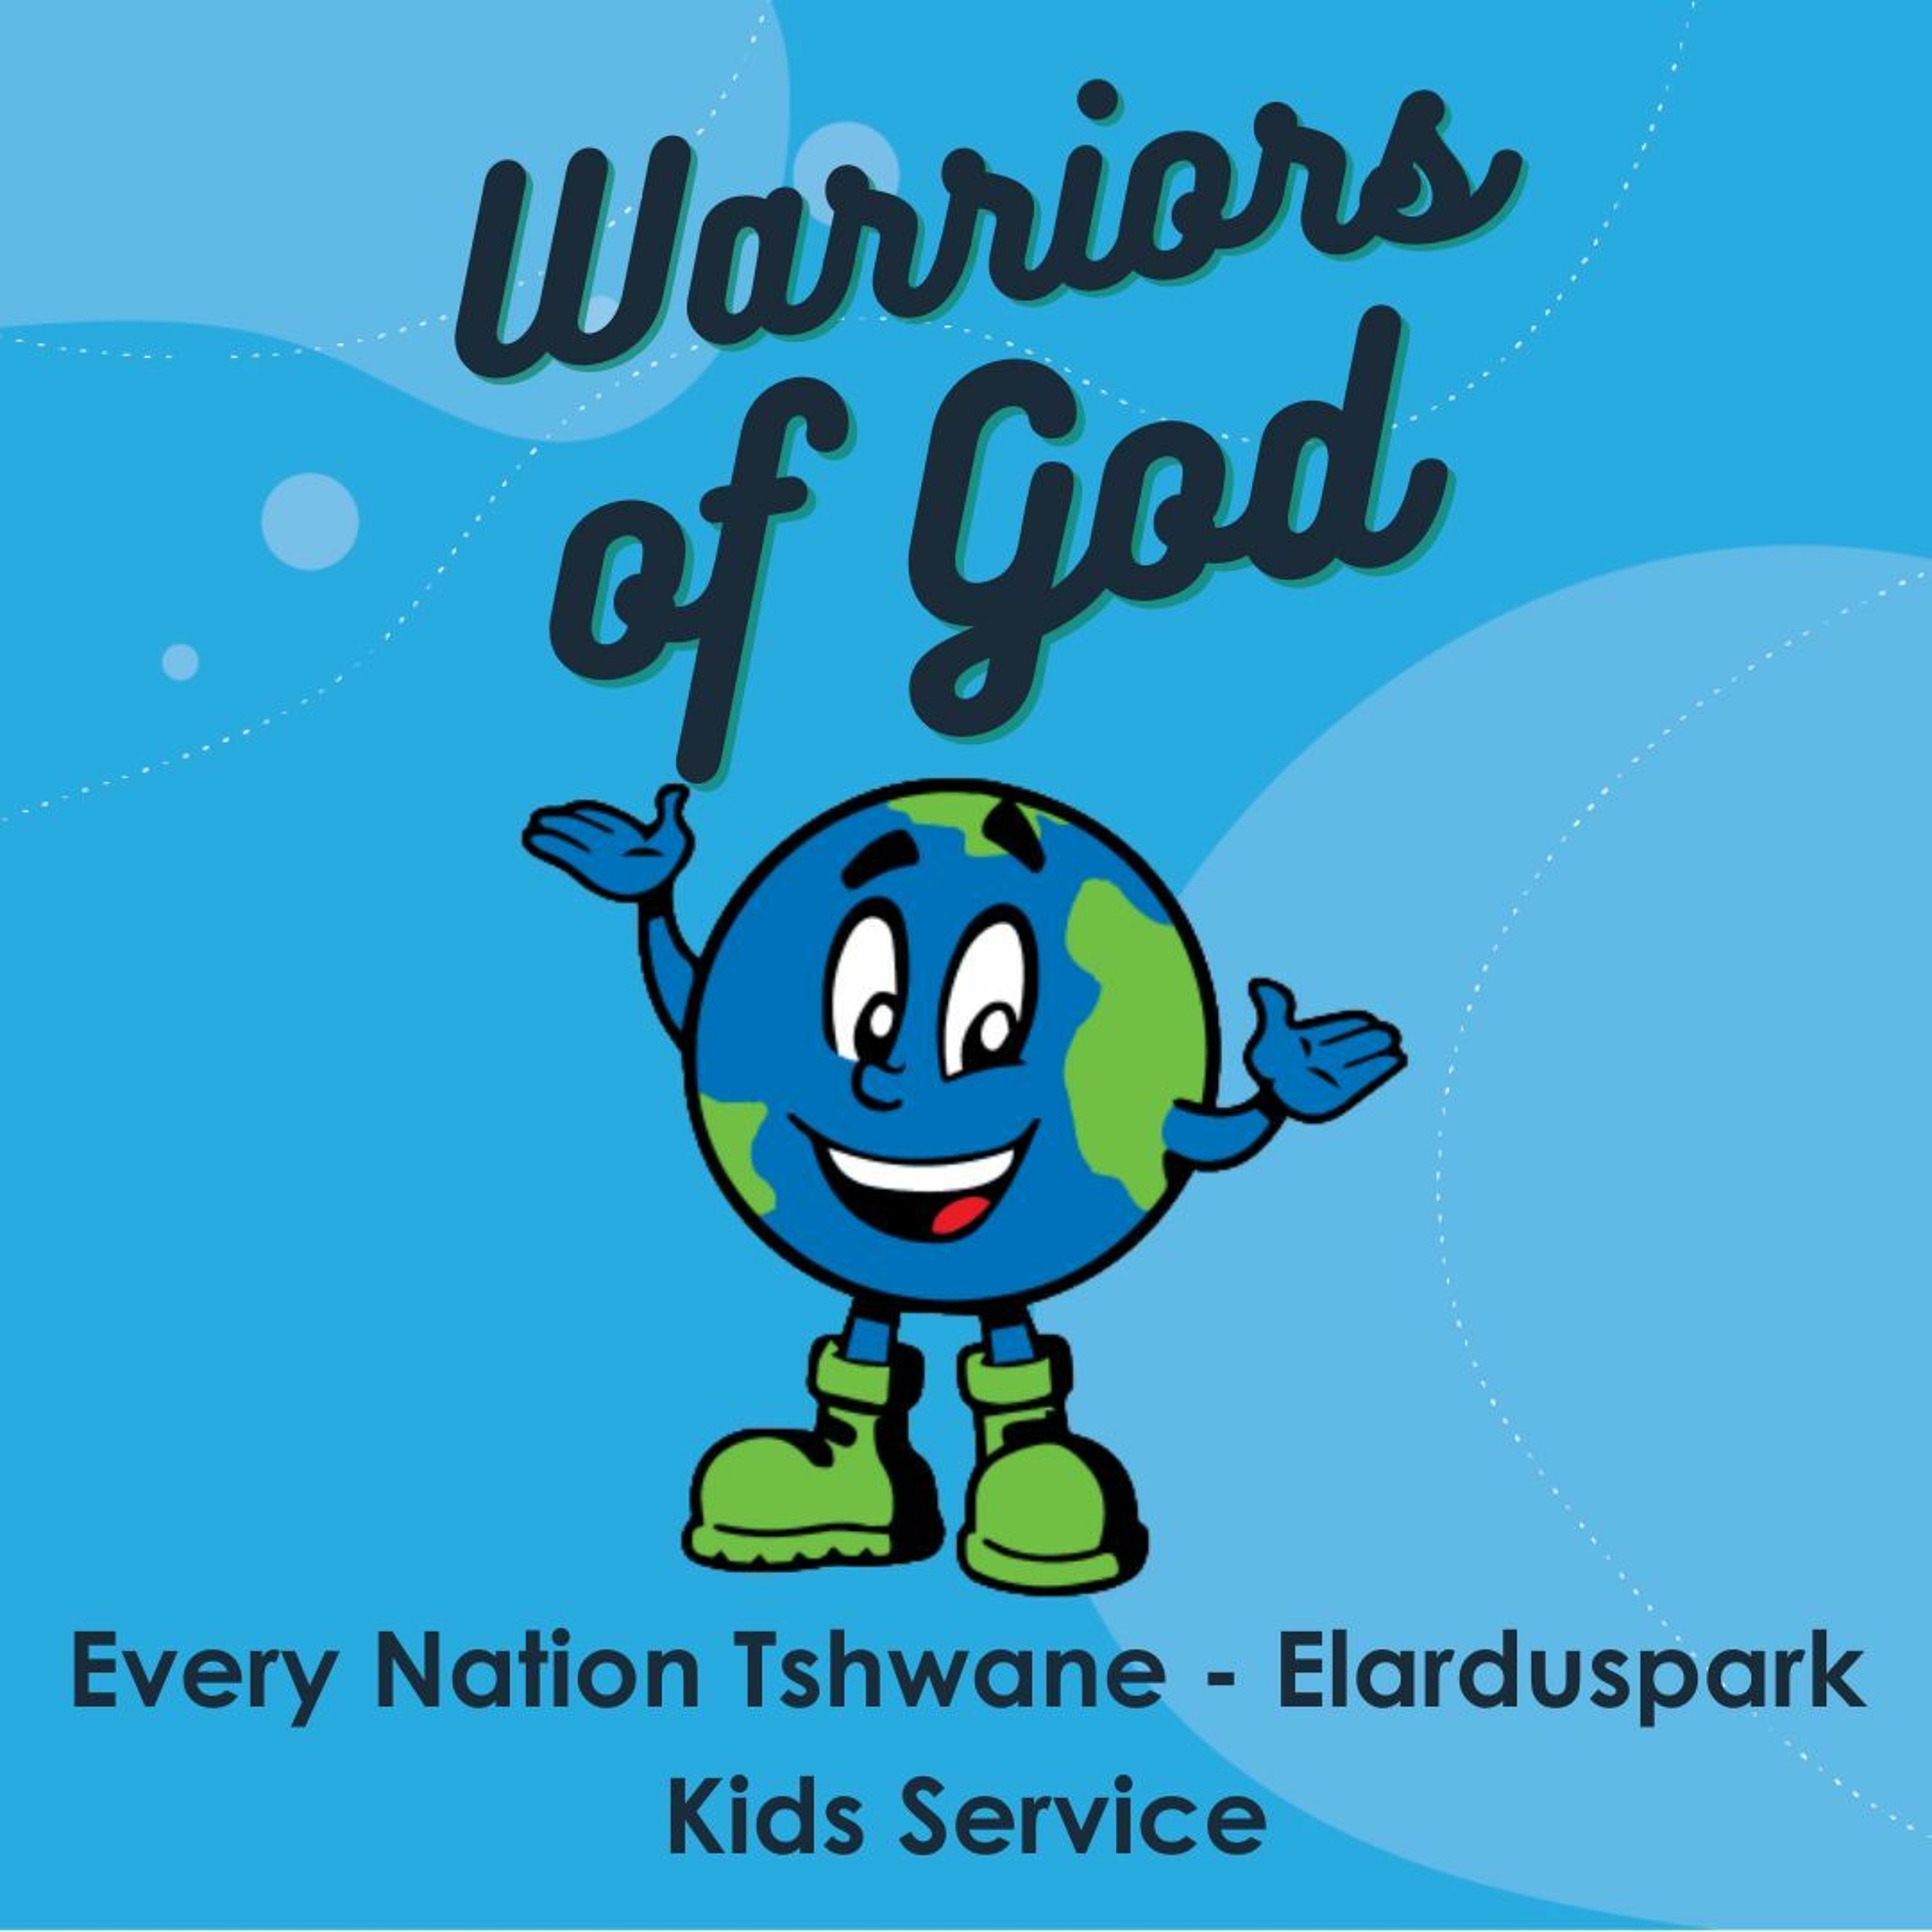 Kids Service - Warriors Of God - Jessica Turner